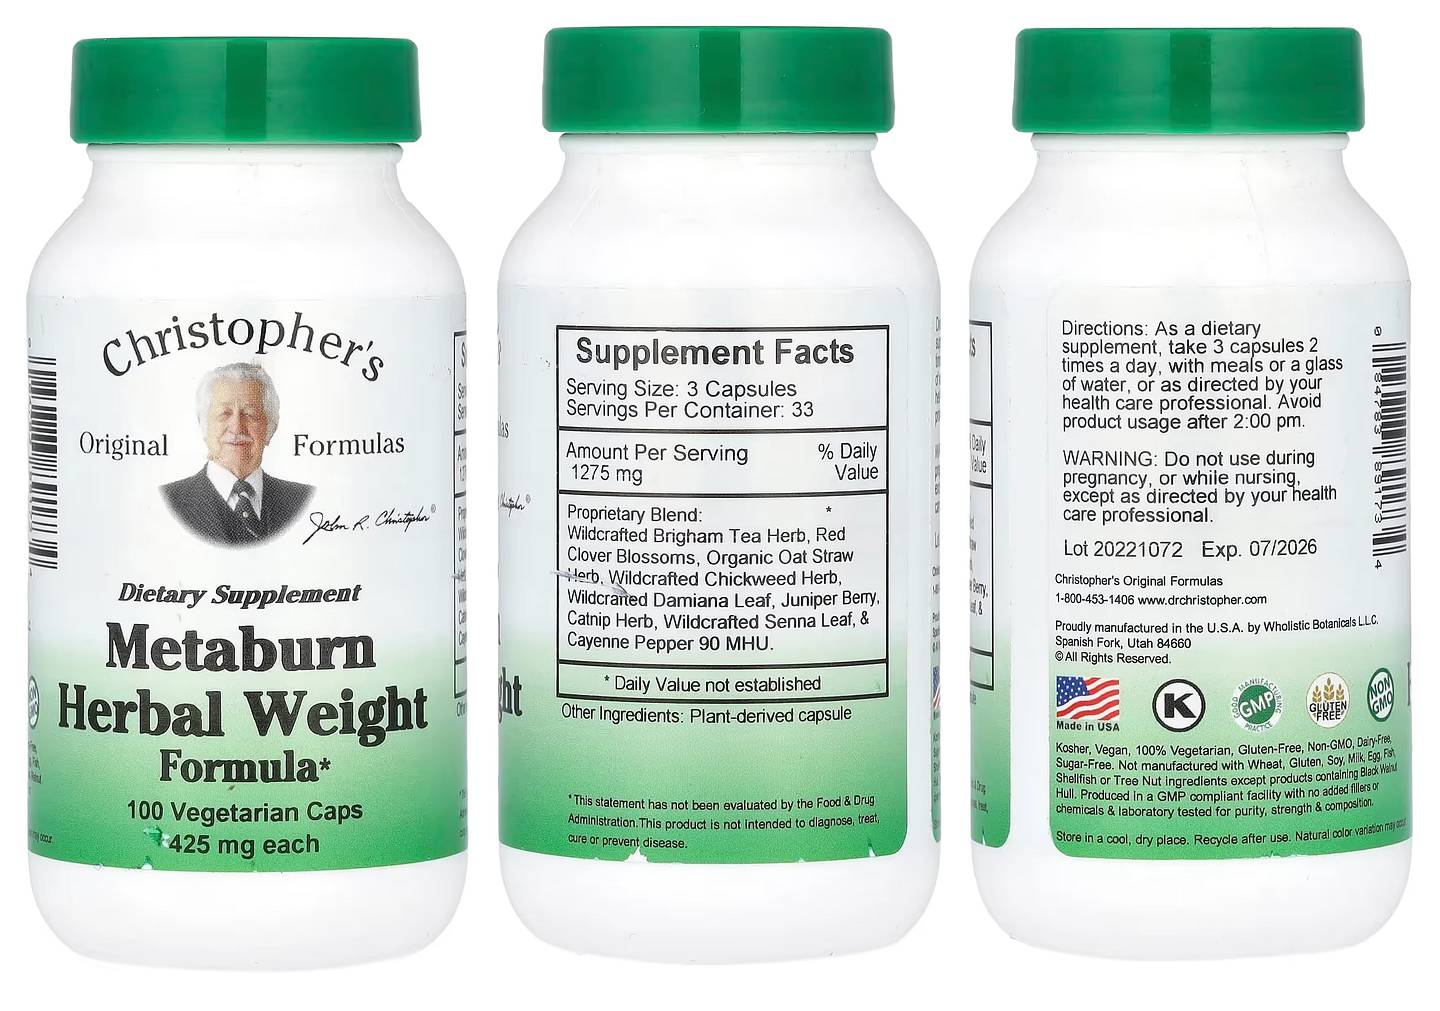 Dr. Christopher's, Metaburn Herbal Weight Formula packaging